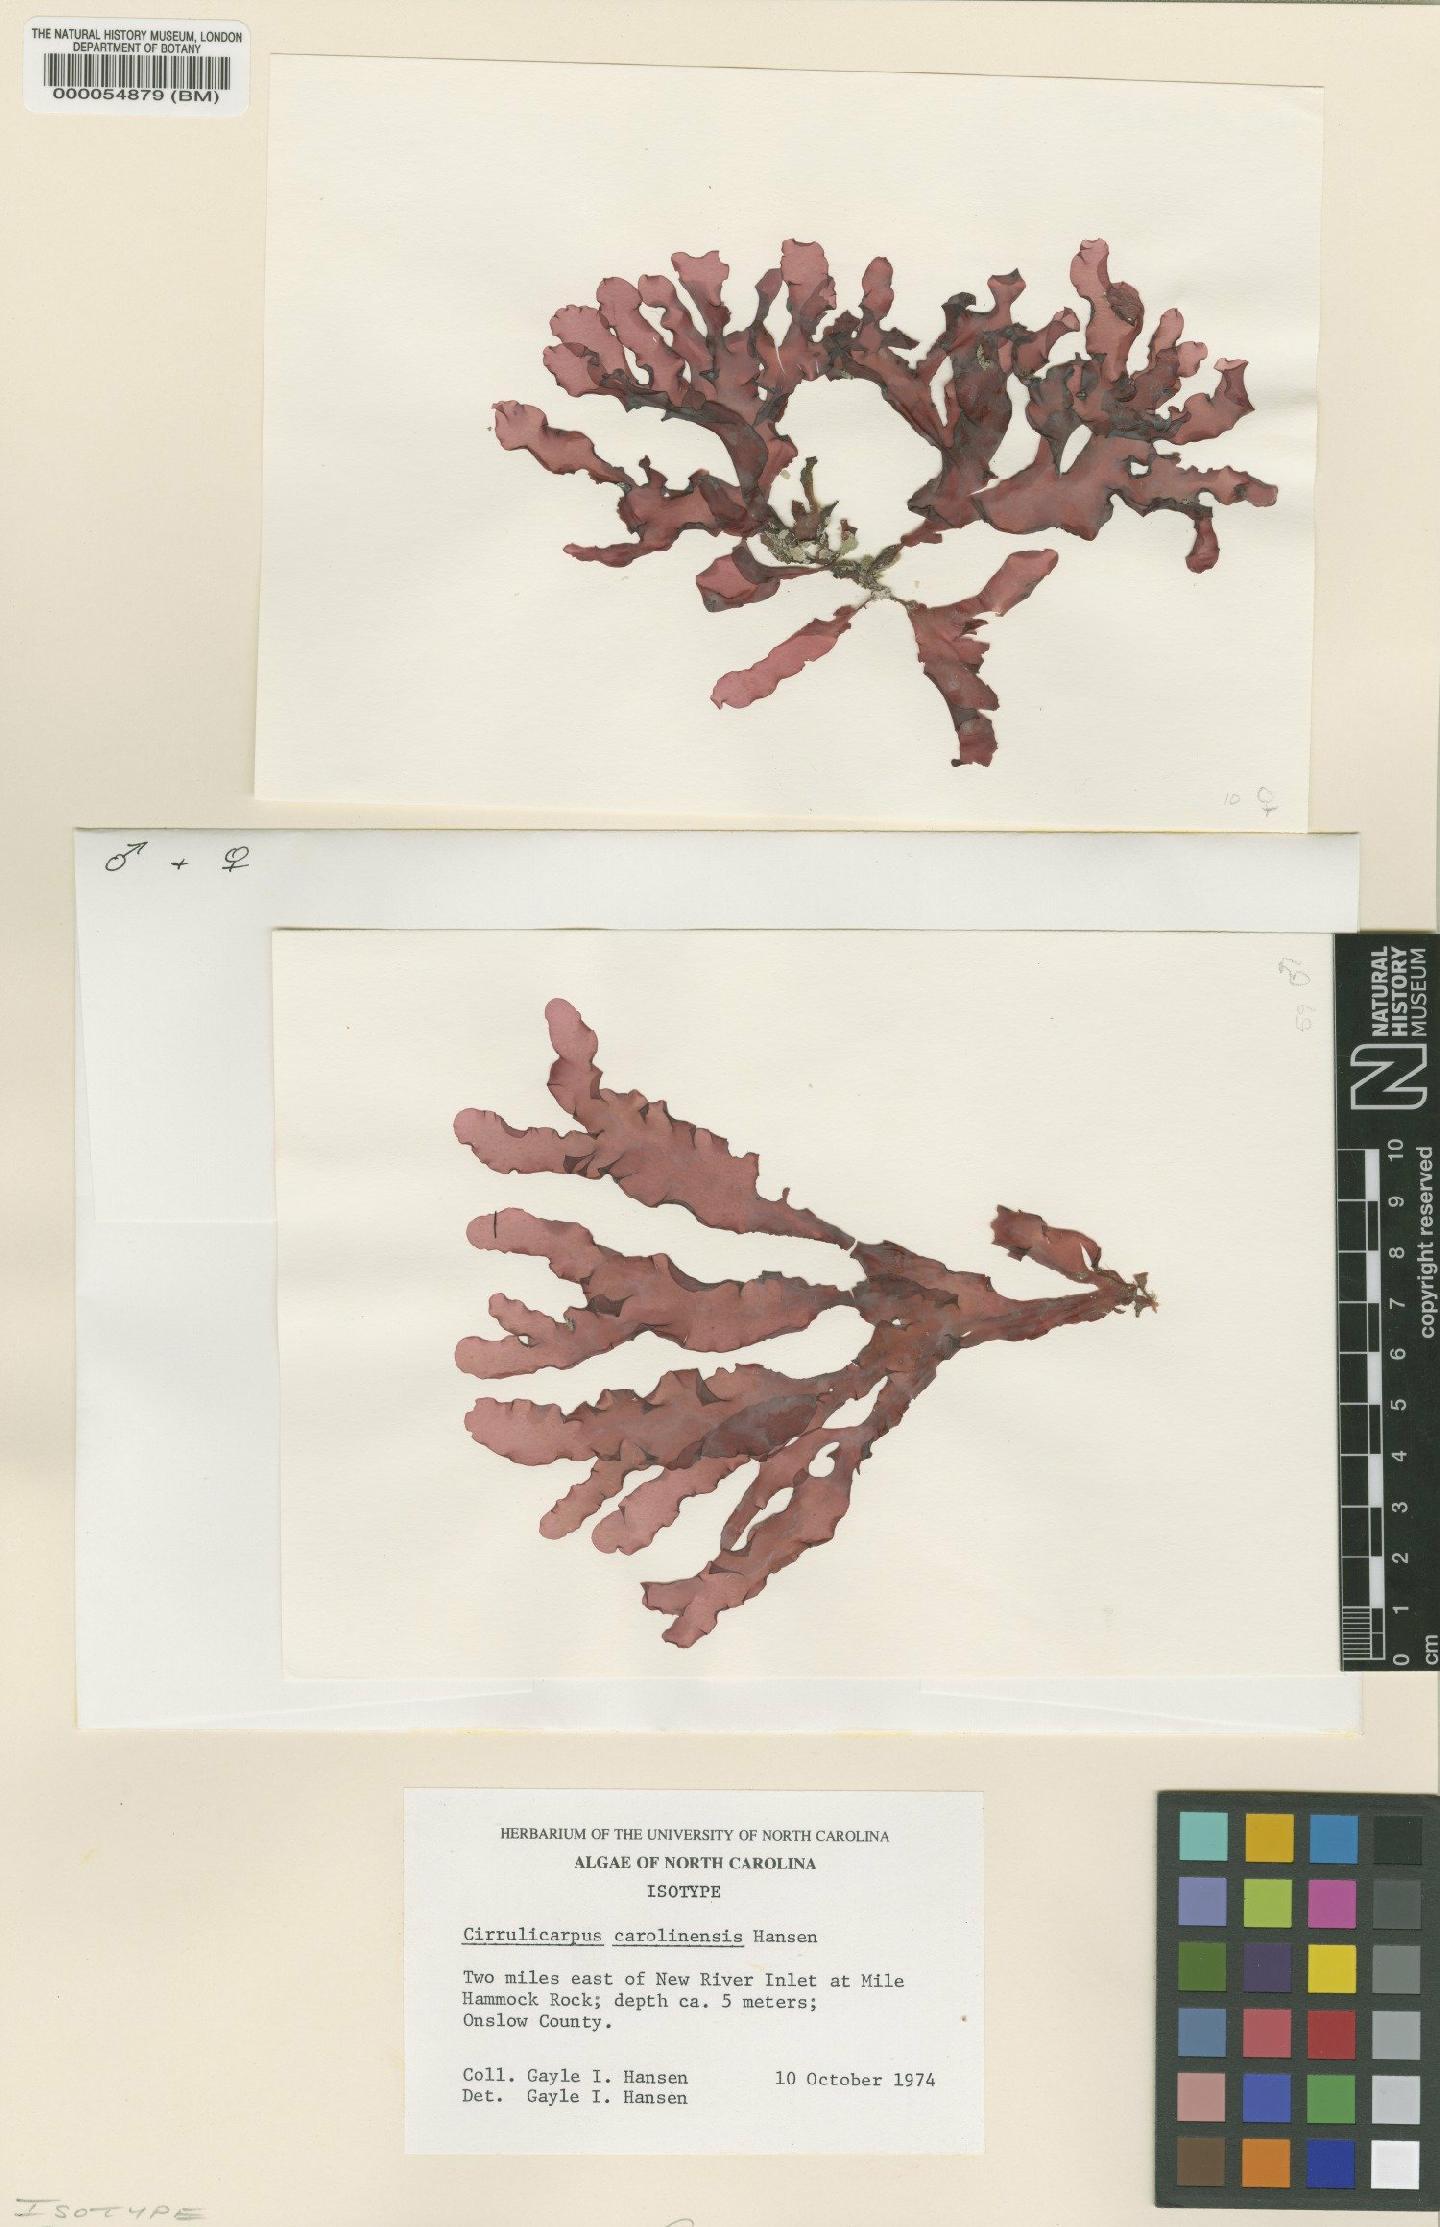 To NHMUK collection (Cirrulicarpus carolinensis Hansen; Isotype; NHMUK:ecatalogue:435137)